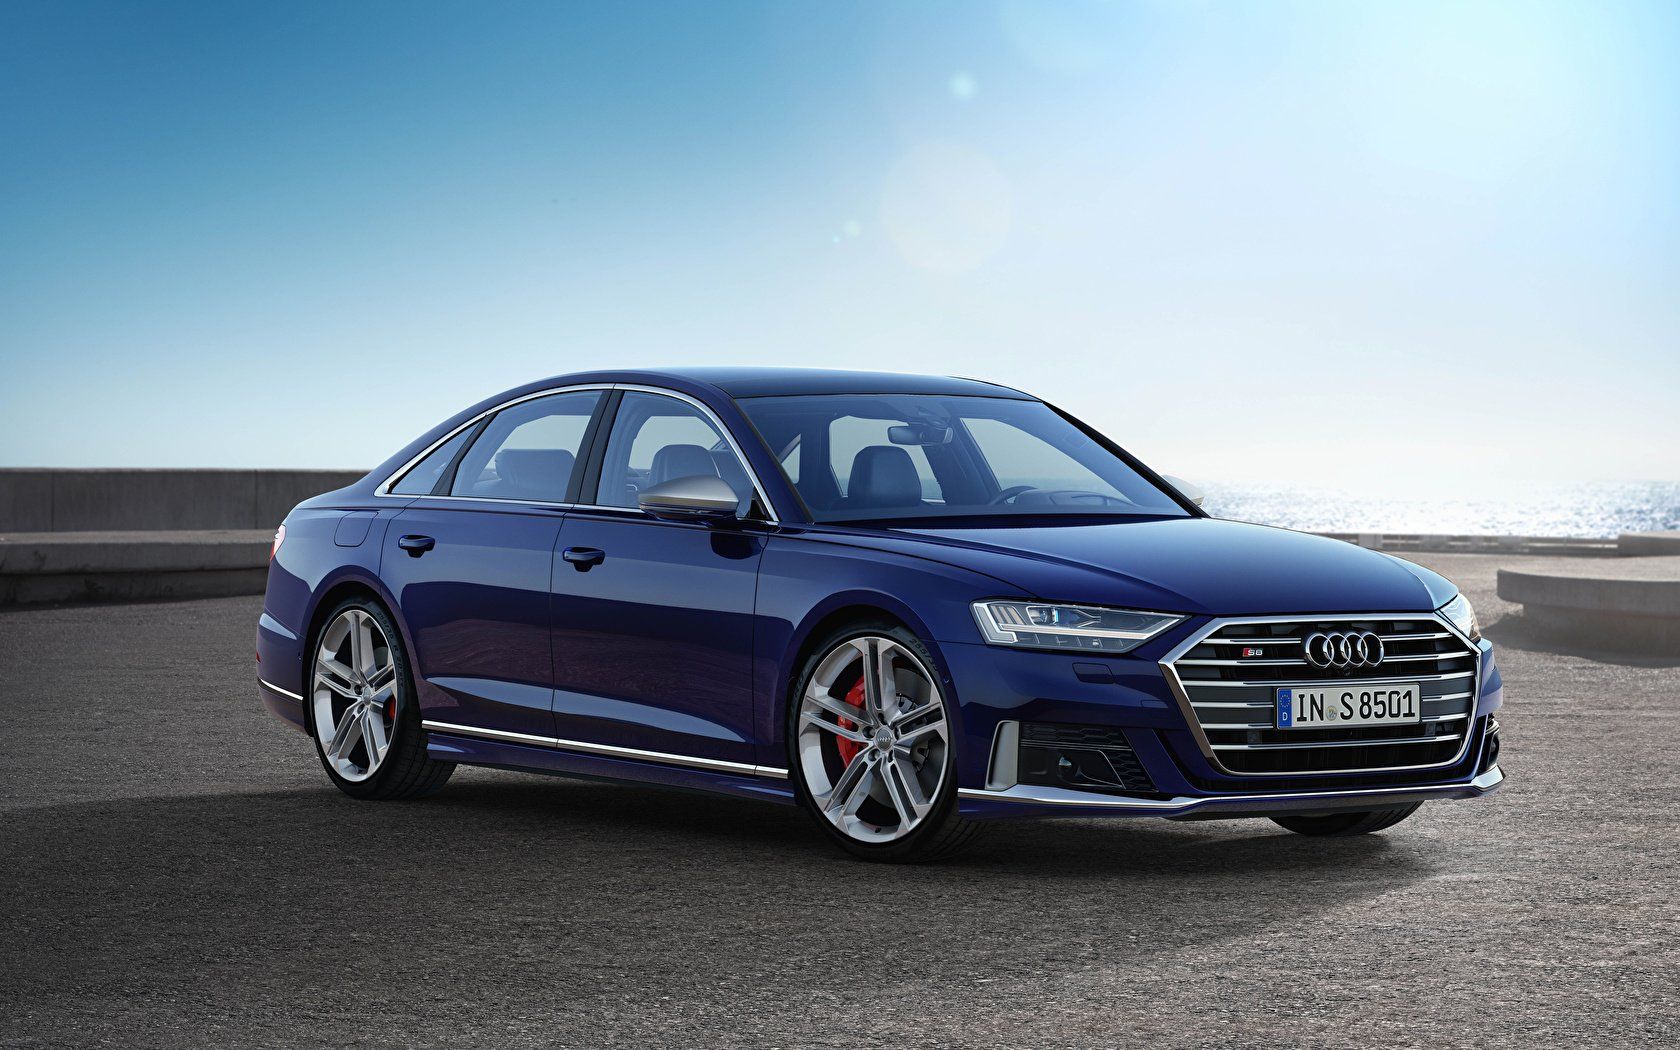 Audi_2019_S8_Worldwide_(D5)_Blue_Metallic_567691_1680x1050.jpg